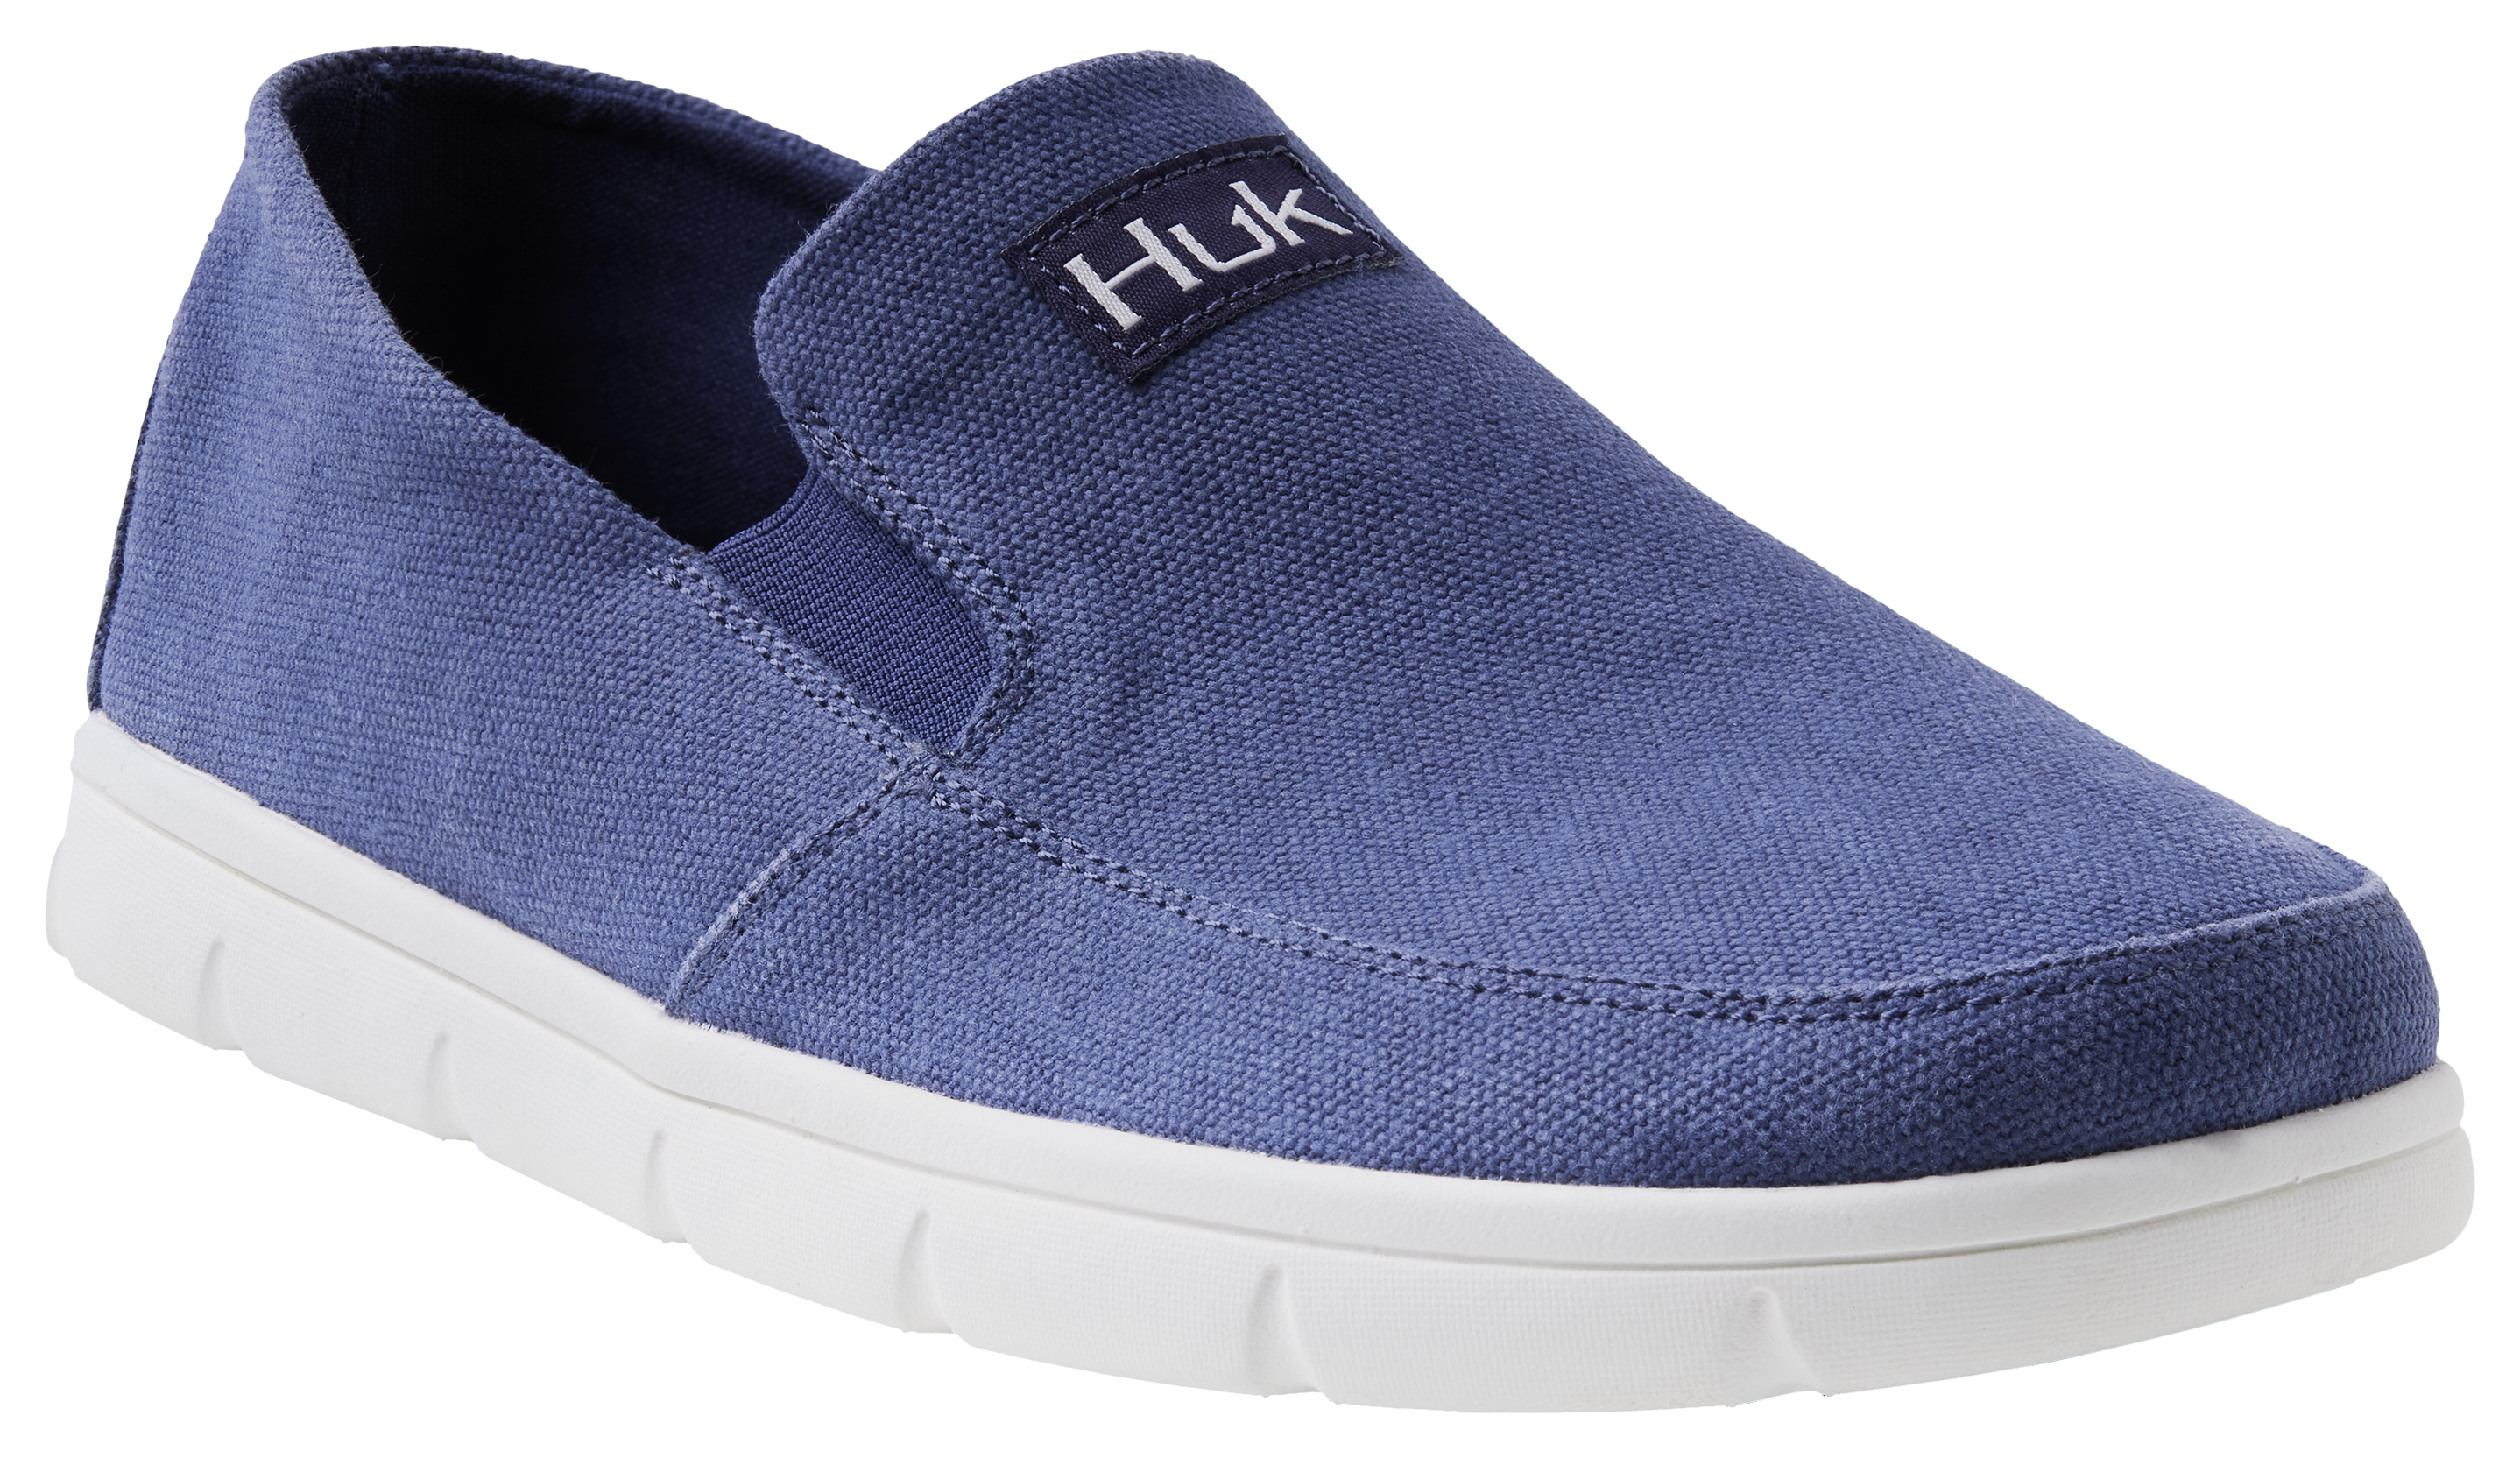 HUK Men's Classic Brewster Slip-on Shoes